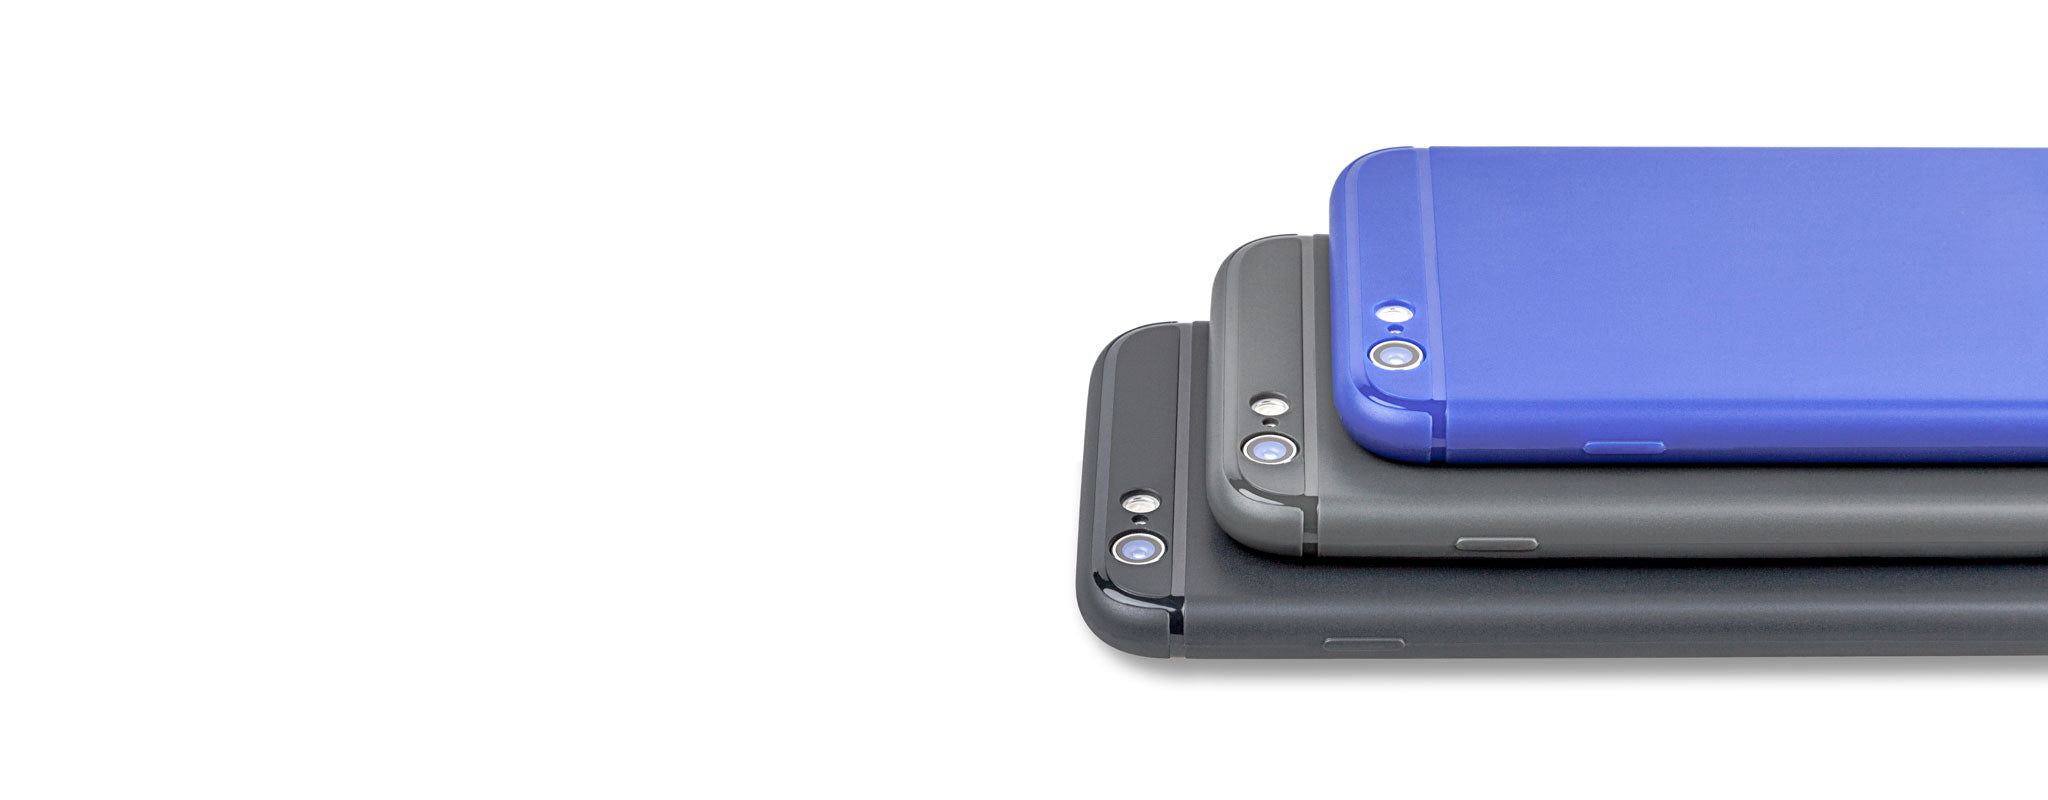 The Sheath | Super slim, shock absorbing minimalist iPhone case | three camera